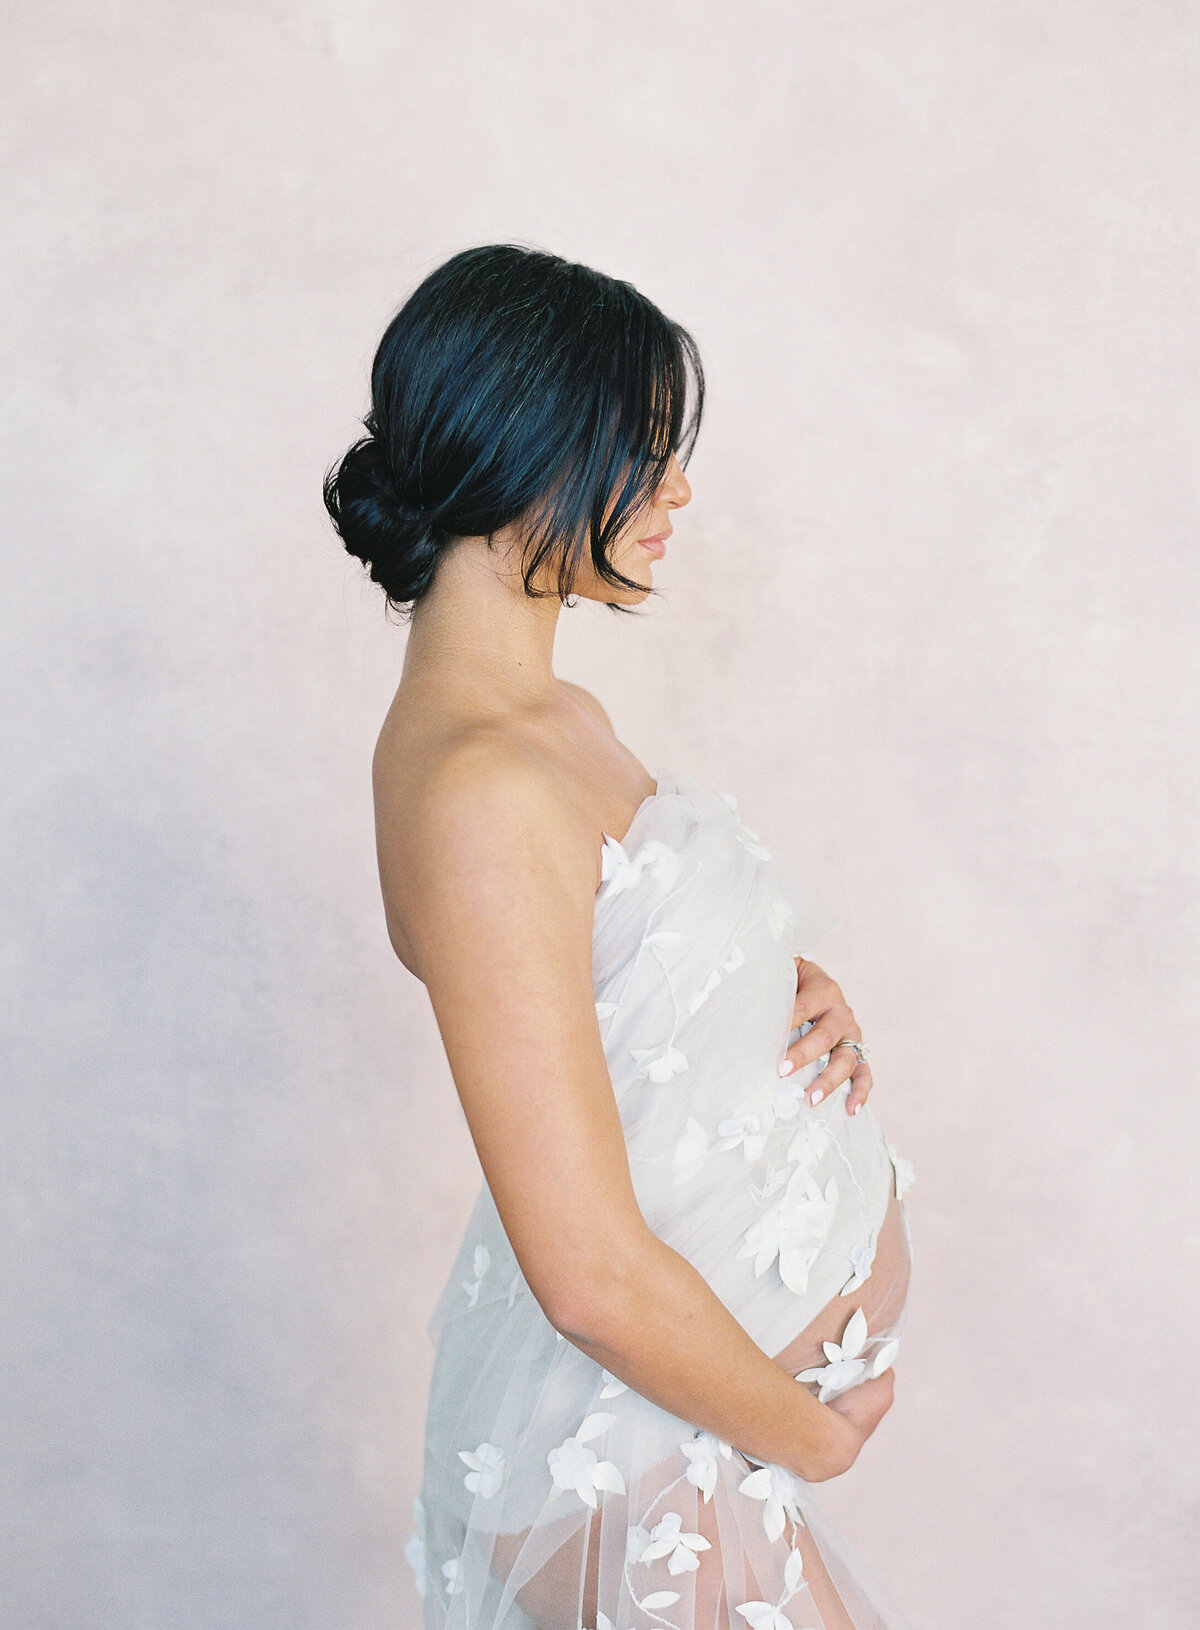 sposto-photo-maternity-boudoir-editorial-film-workshop-photography 37